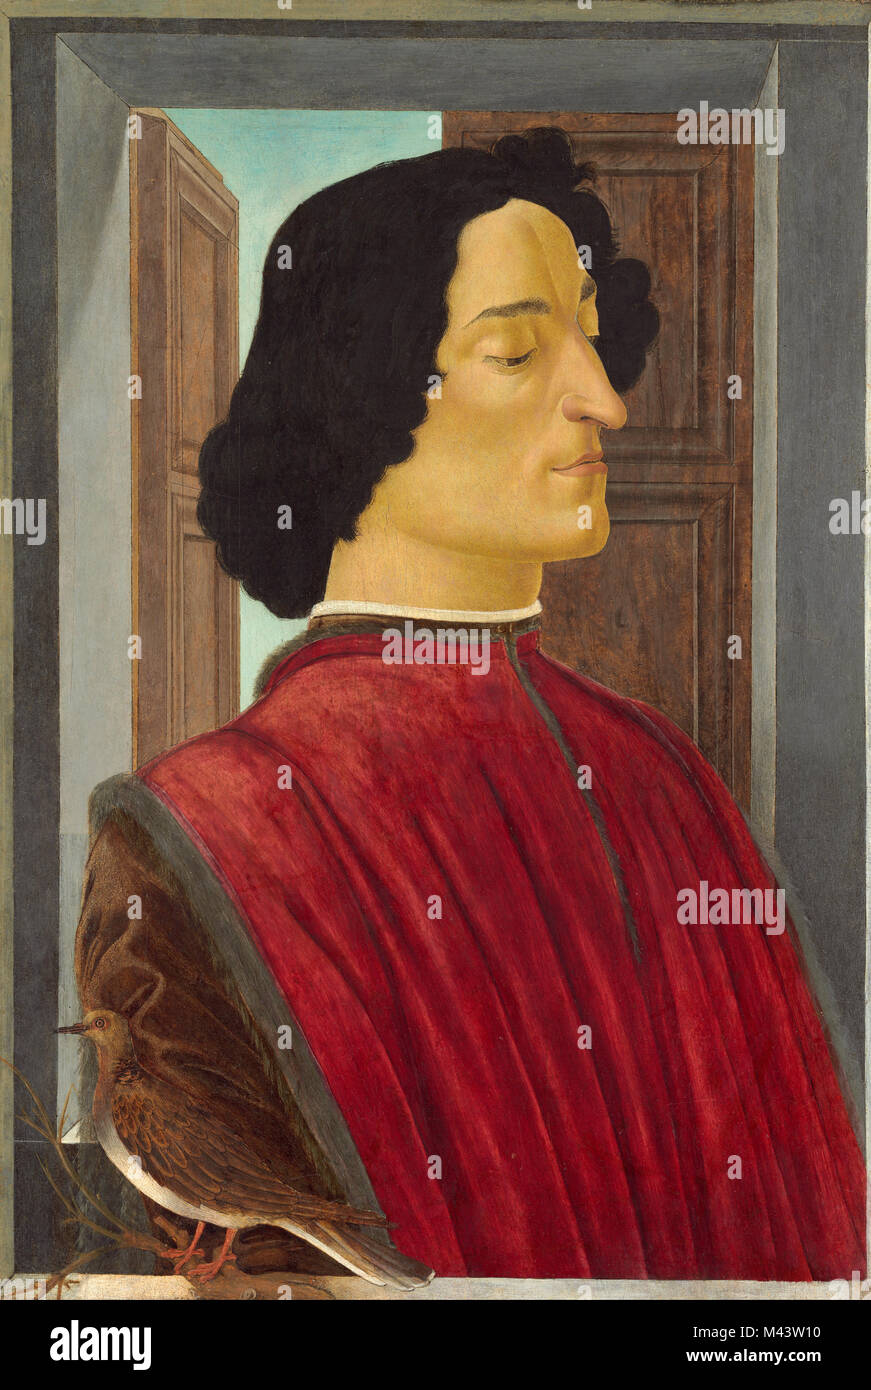 Giuliano de' Medici by Botticelli Stock Photo